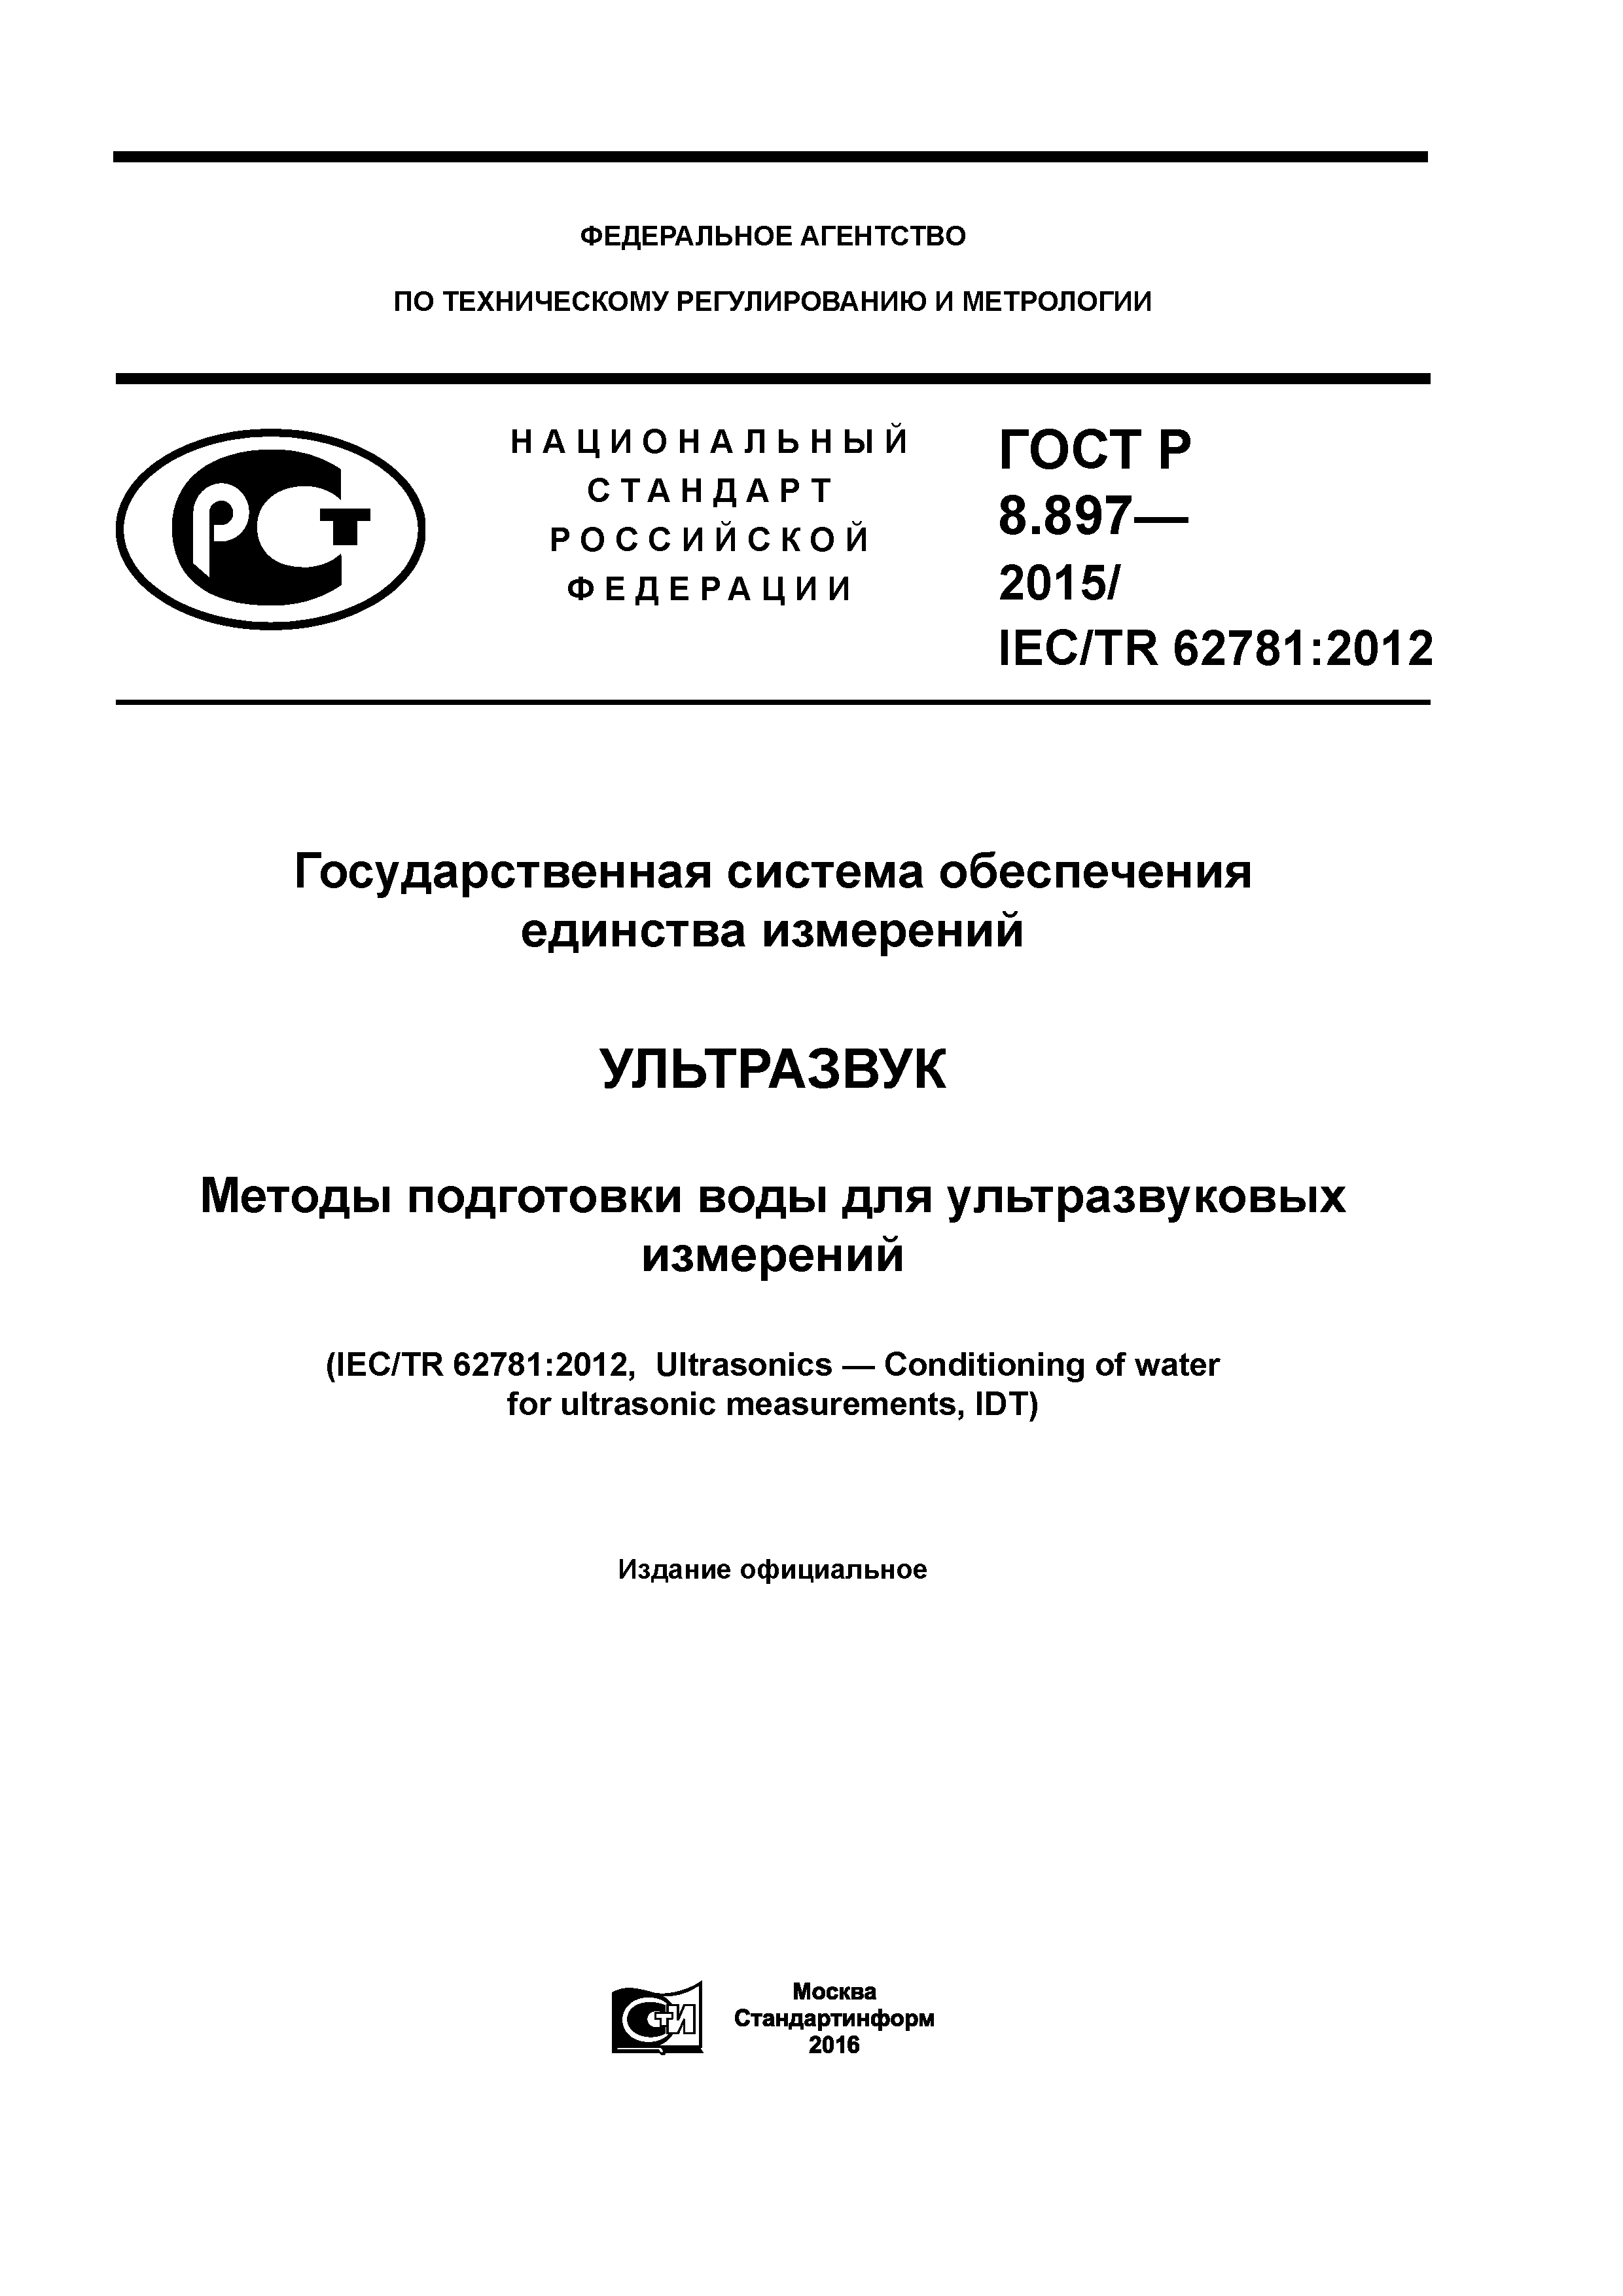 ГОСТ Р 8.897-2015